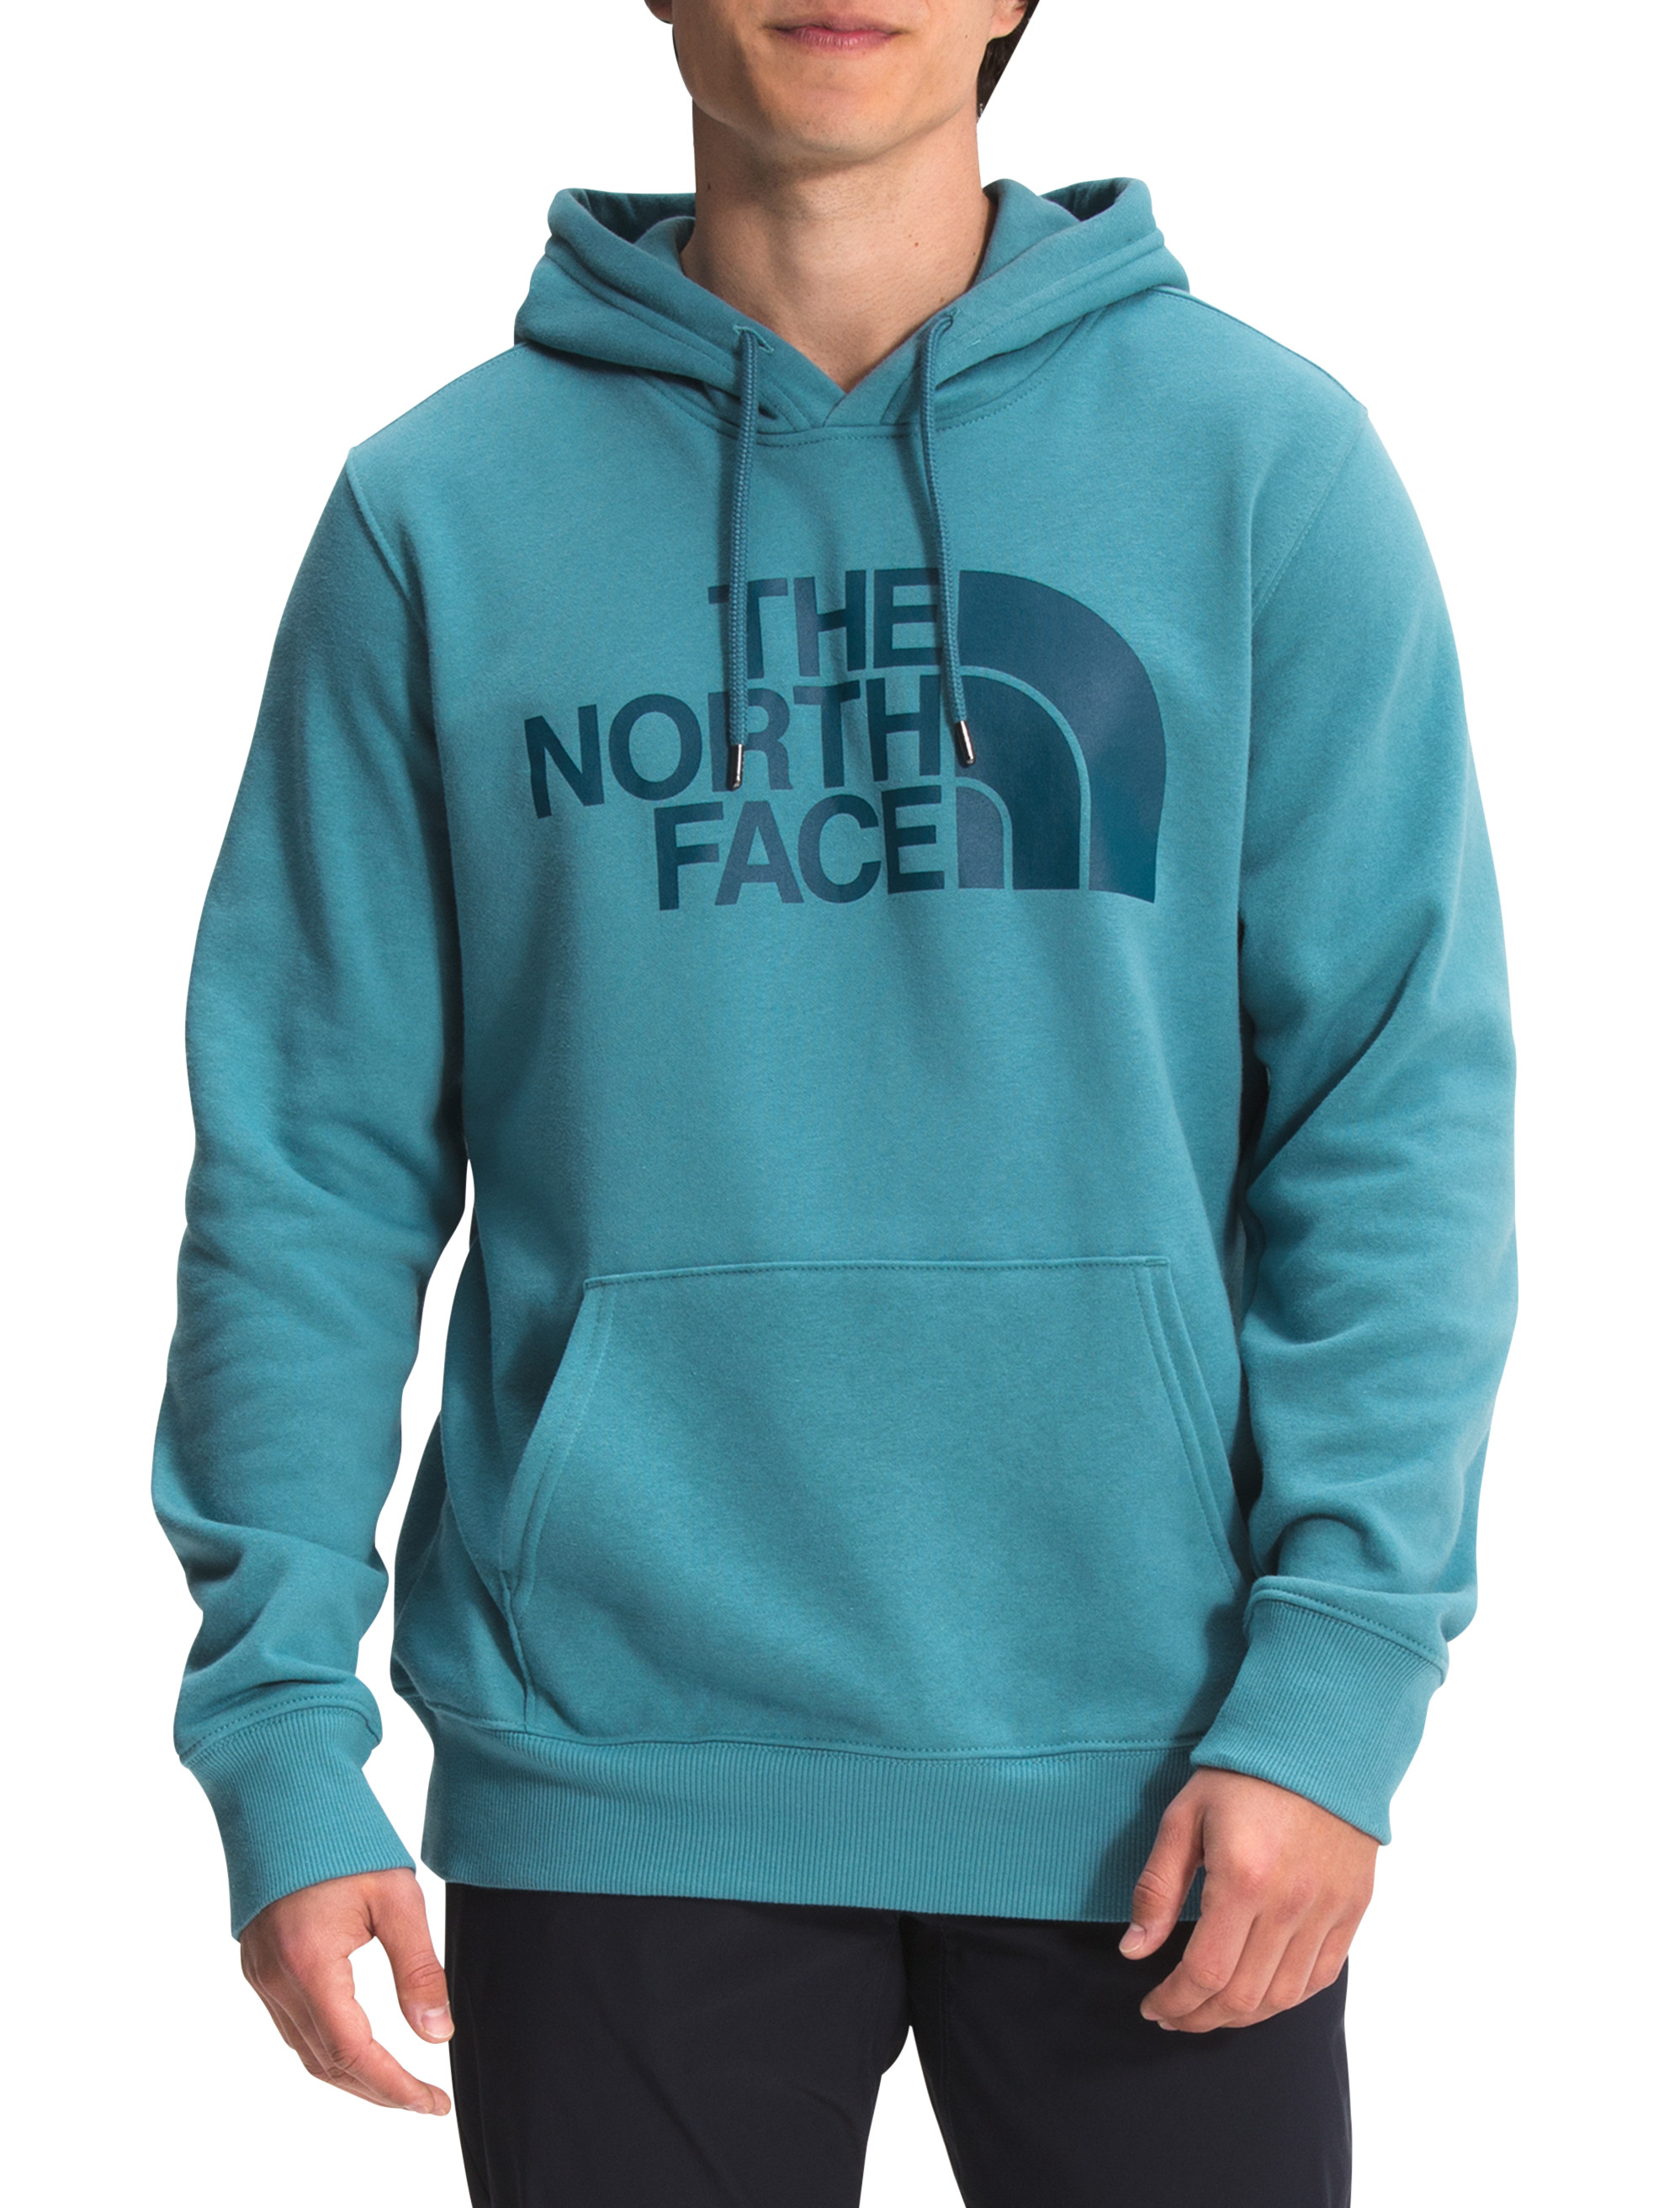 the north face men's jacket 3xl Online 